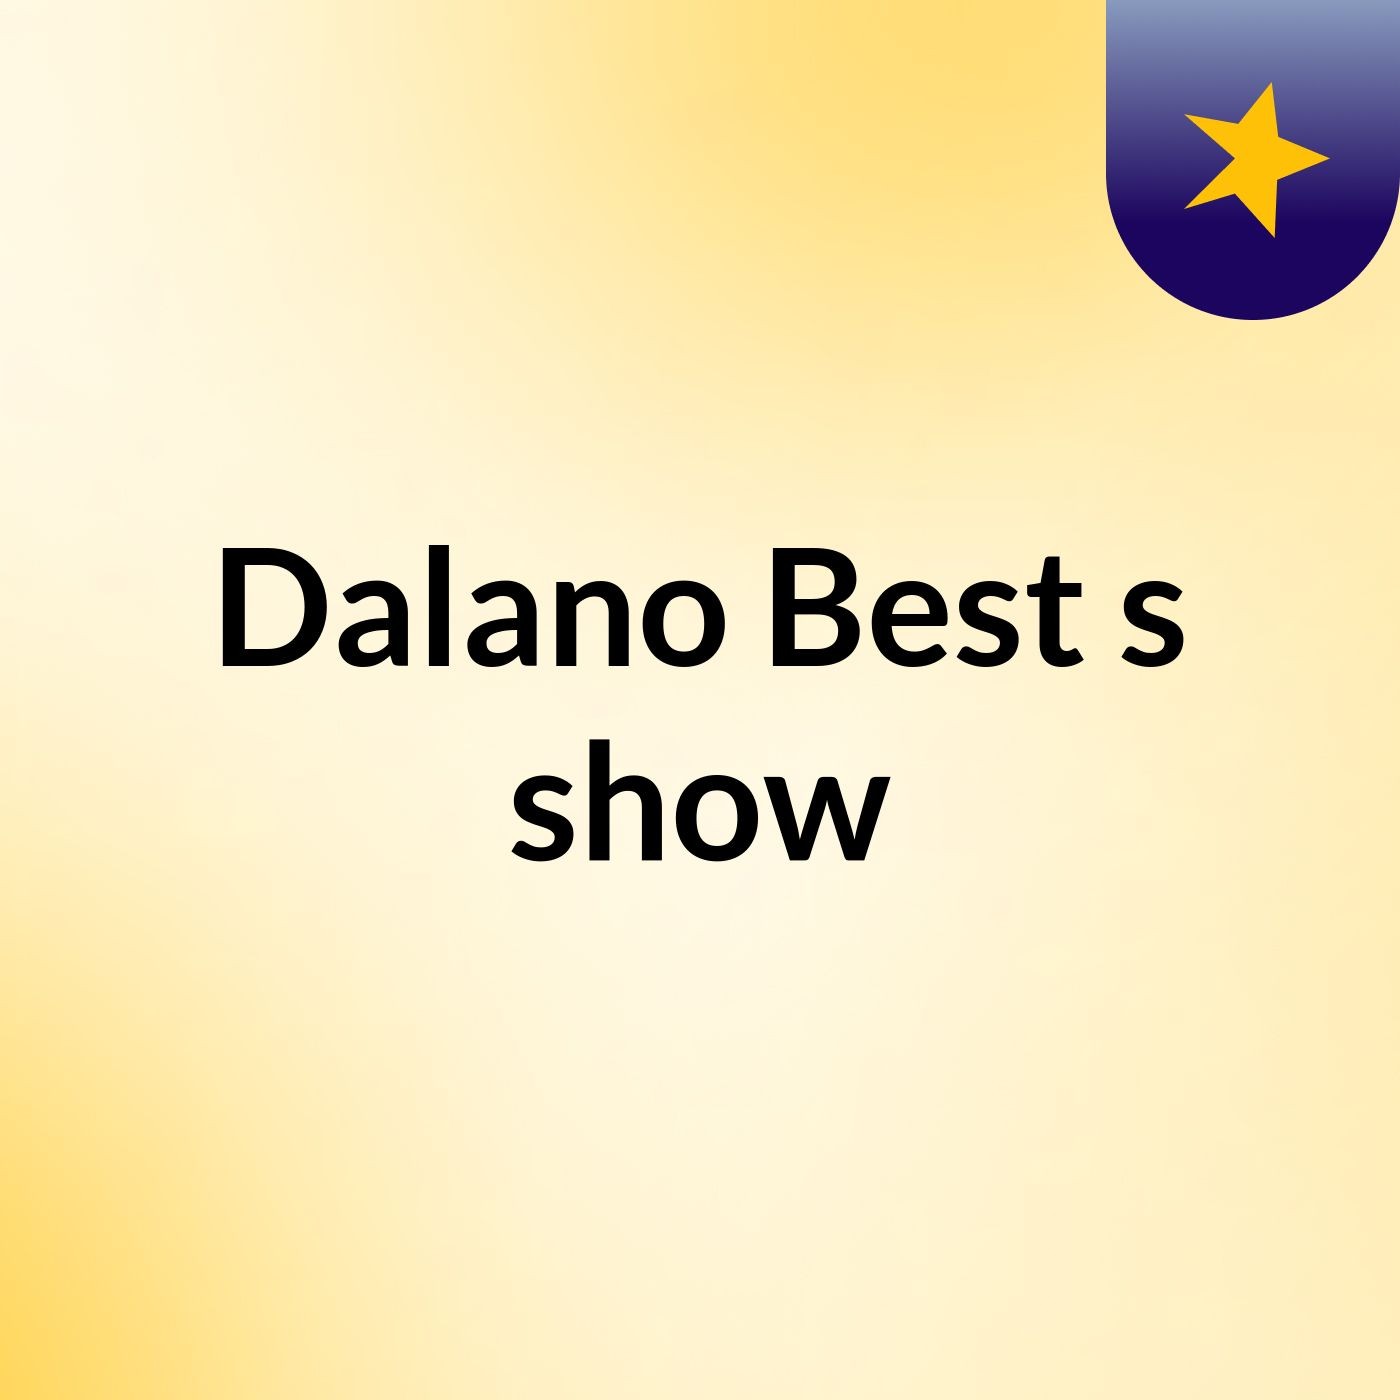 Dalano Best's show